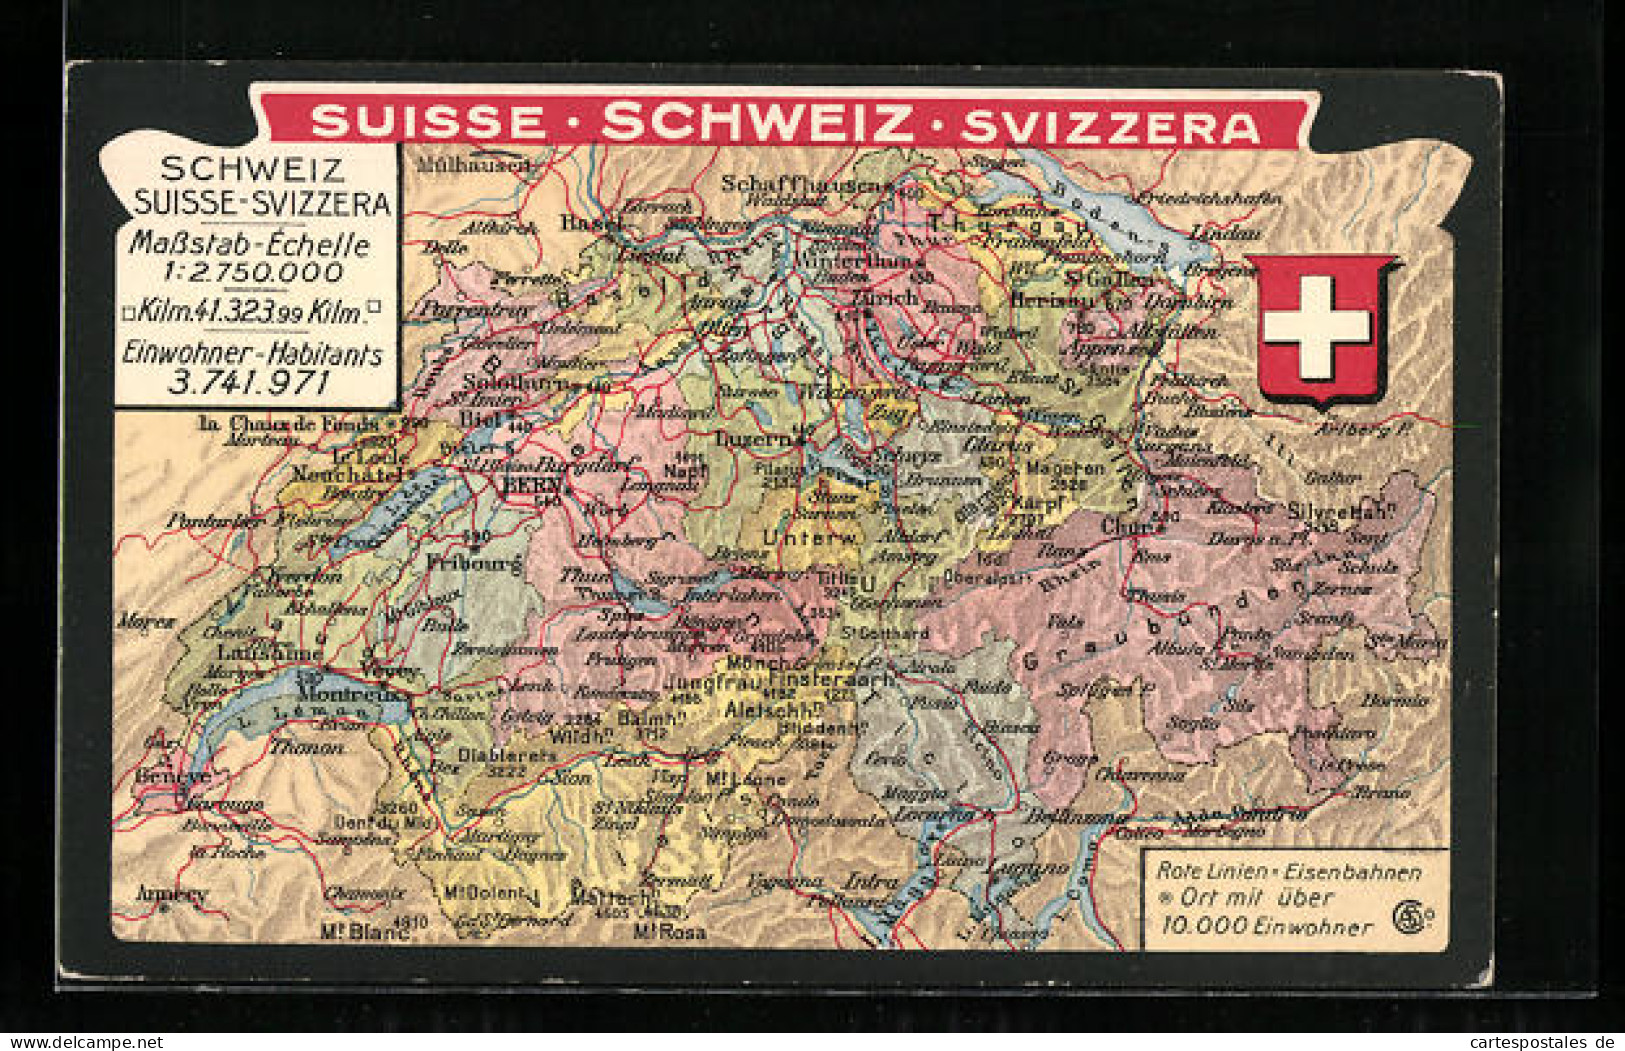 AK Schweiz, Landkarte Mit Schweizer Wappen  - Cartes Géographiques